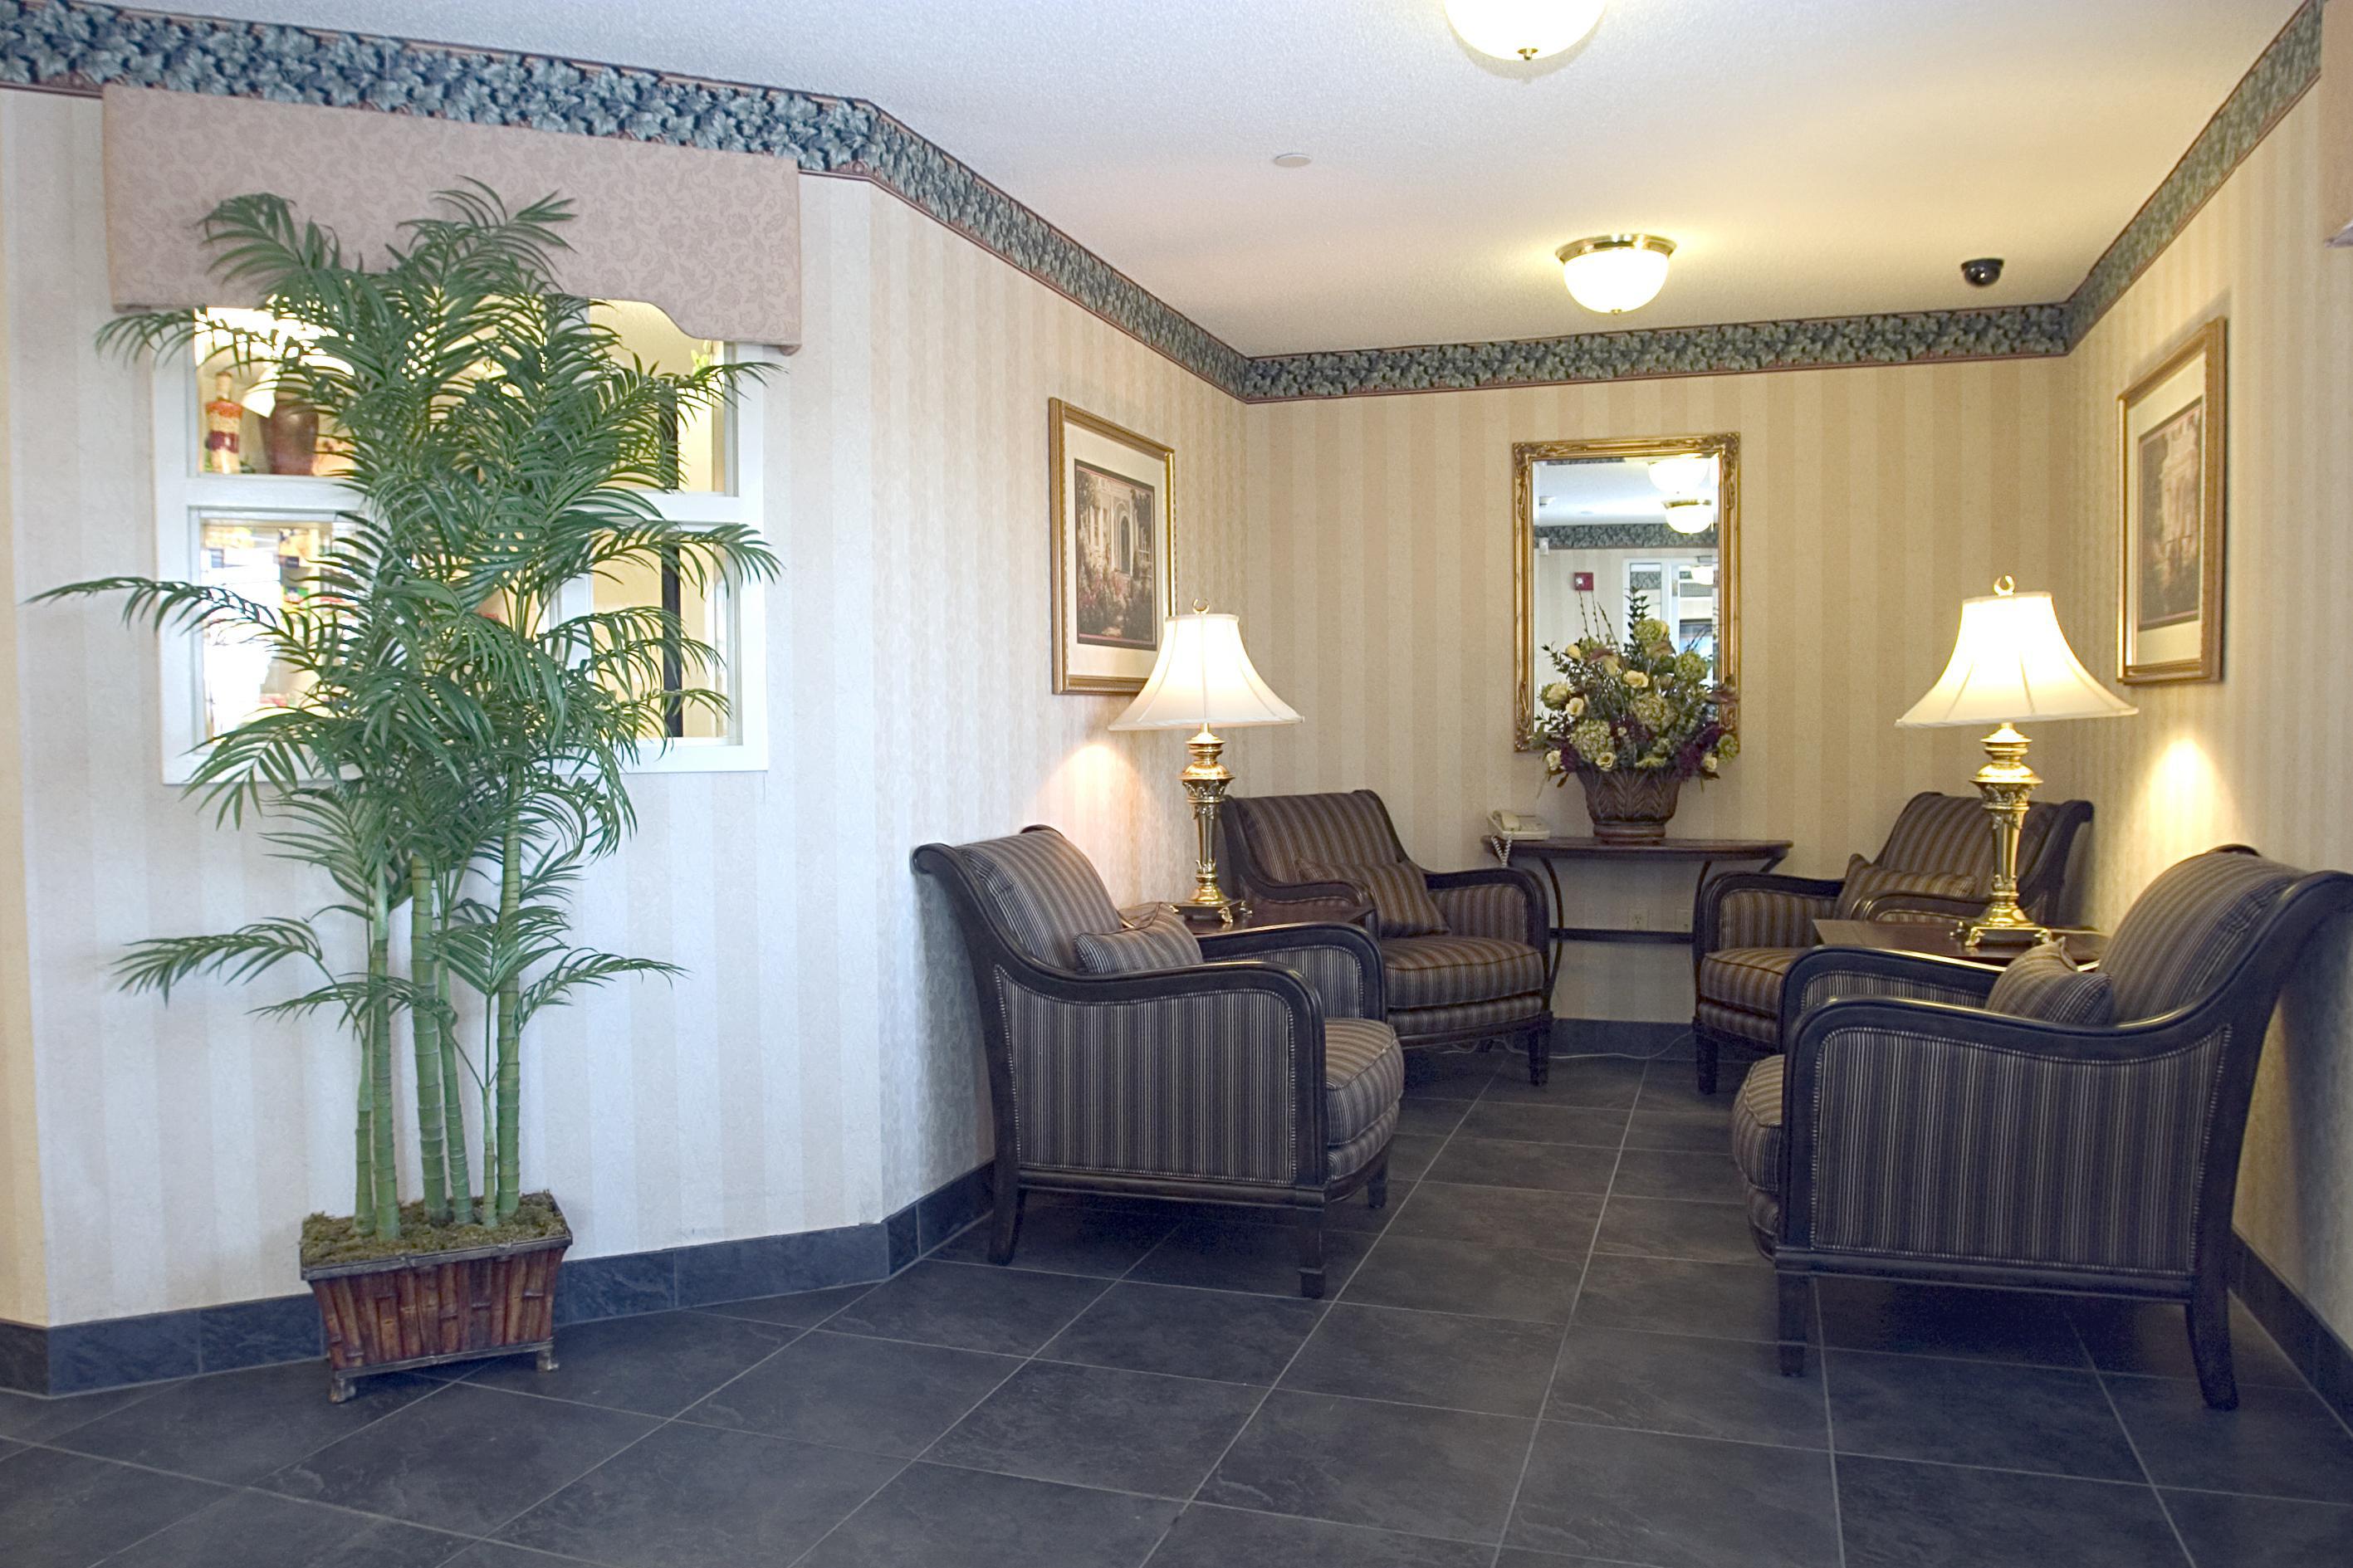 Photo of Candlewood Suites Boston - Burlington, Burlington, MA